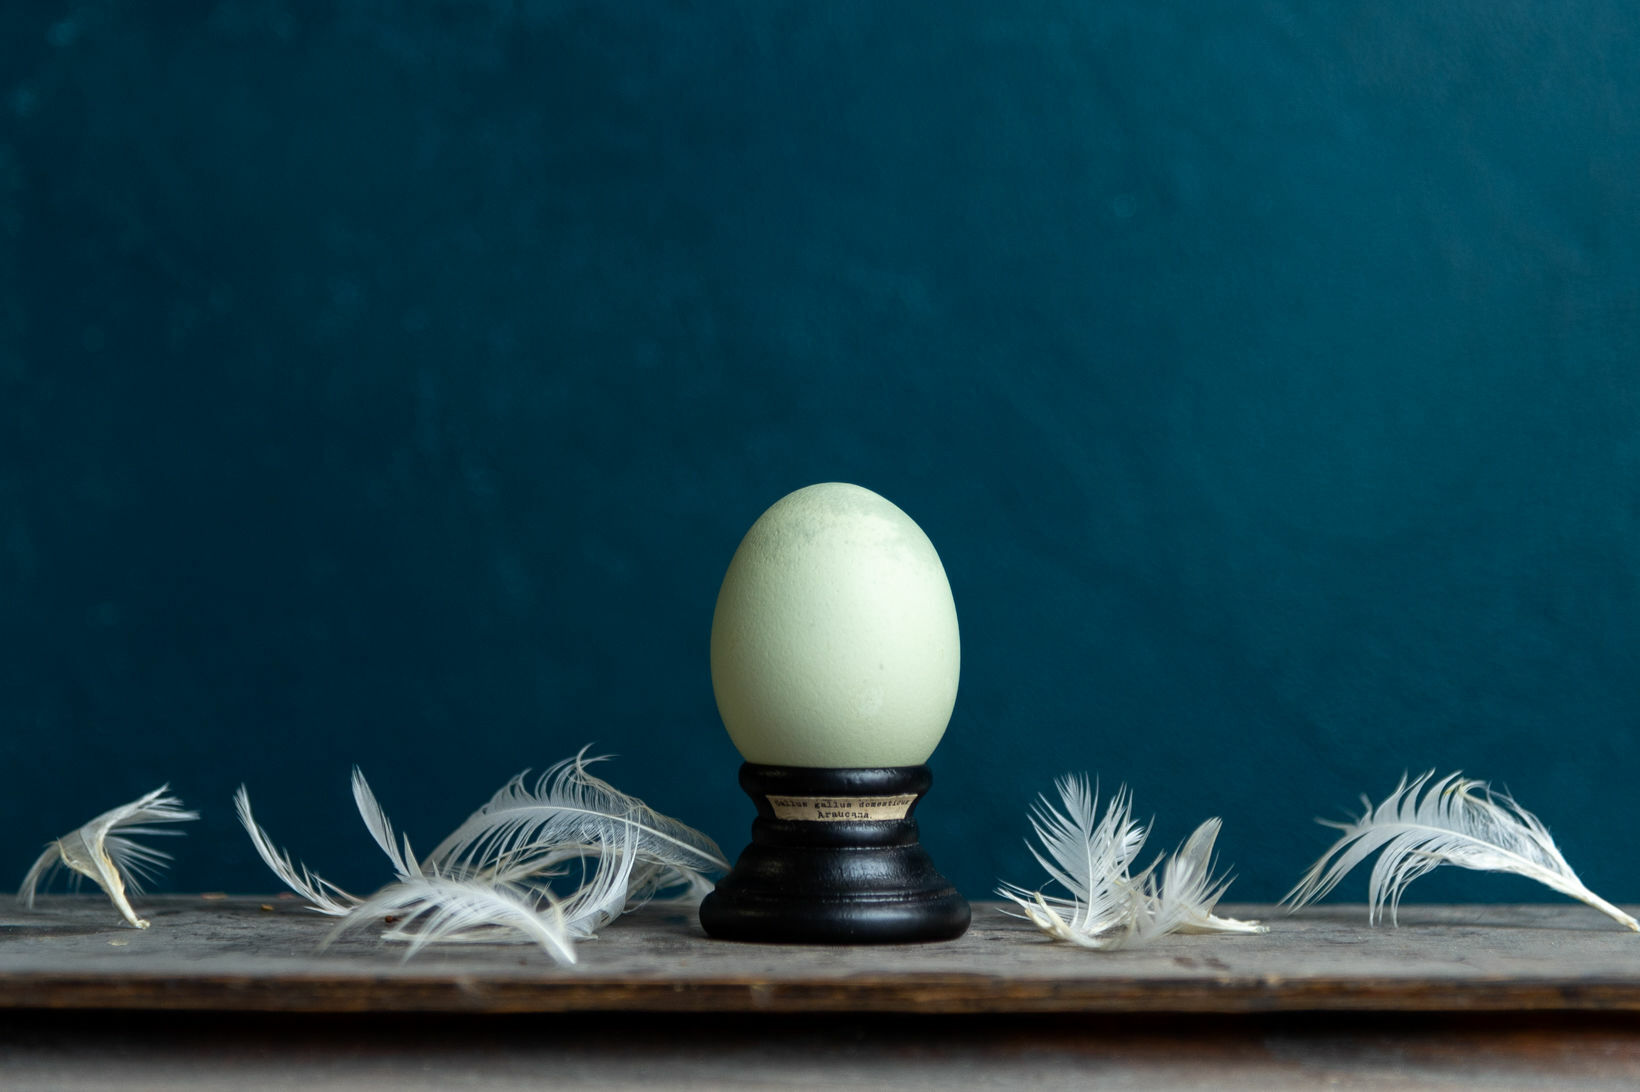 Bird Egg Specimen アロウカナの卵標本 Miomori Online Shop